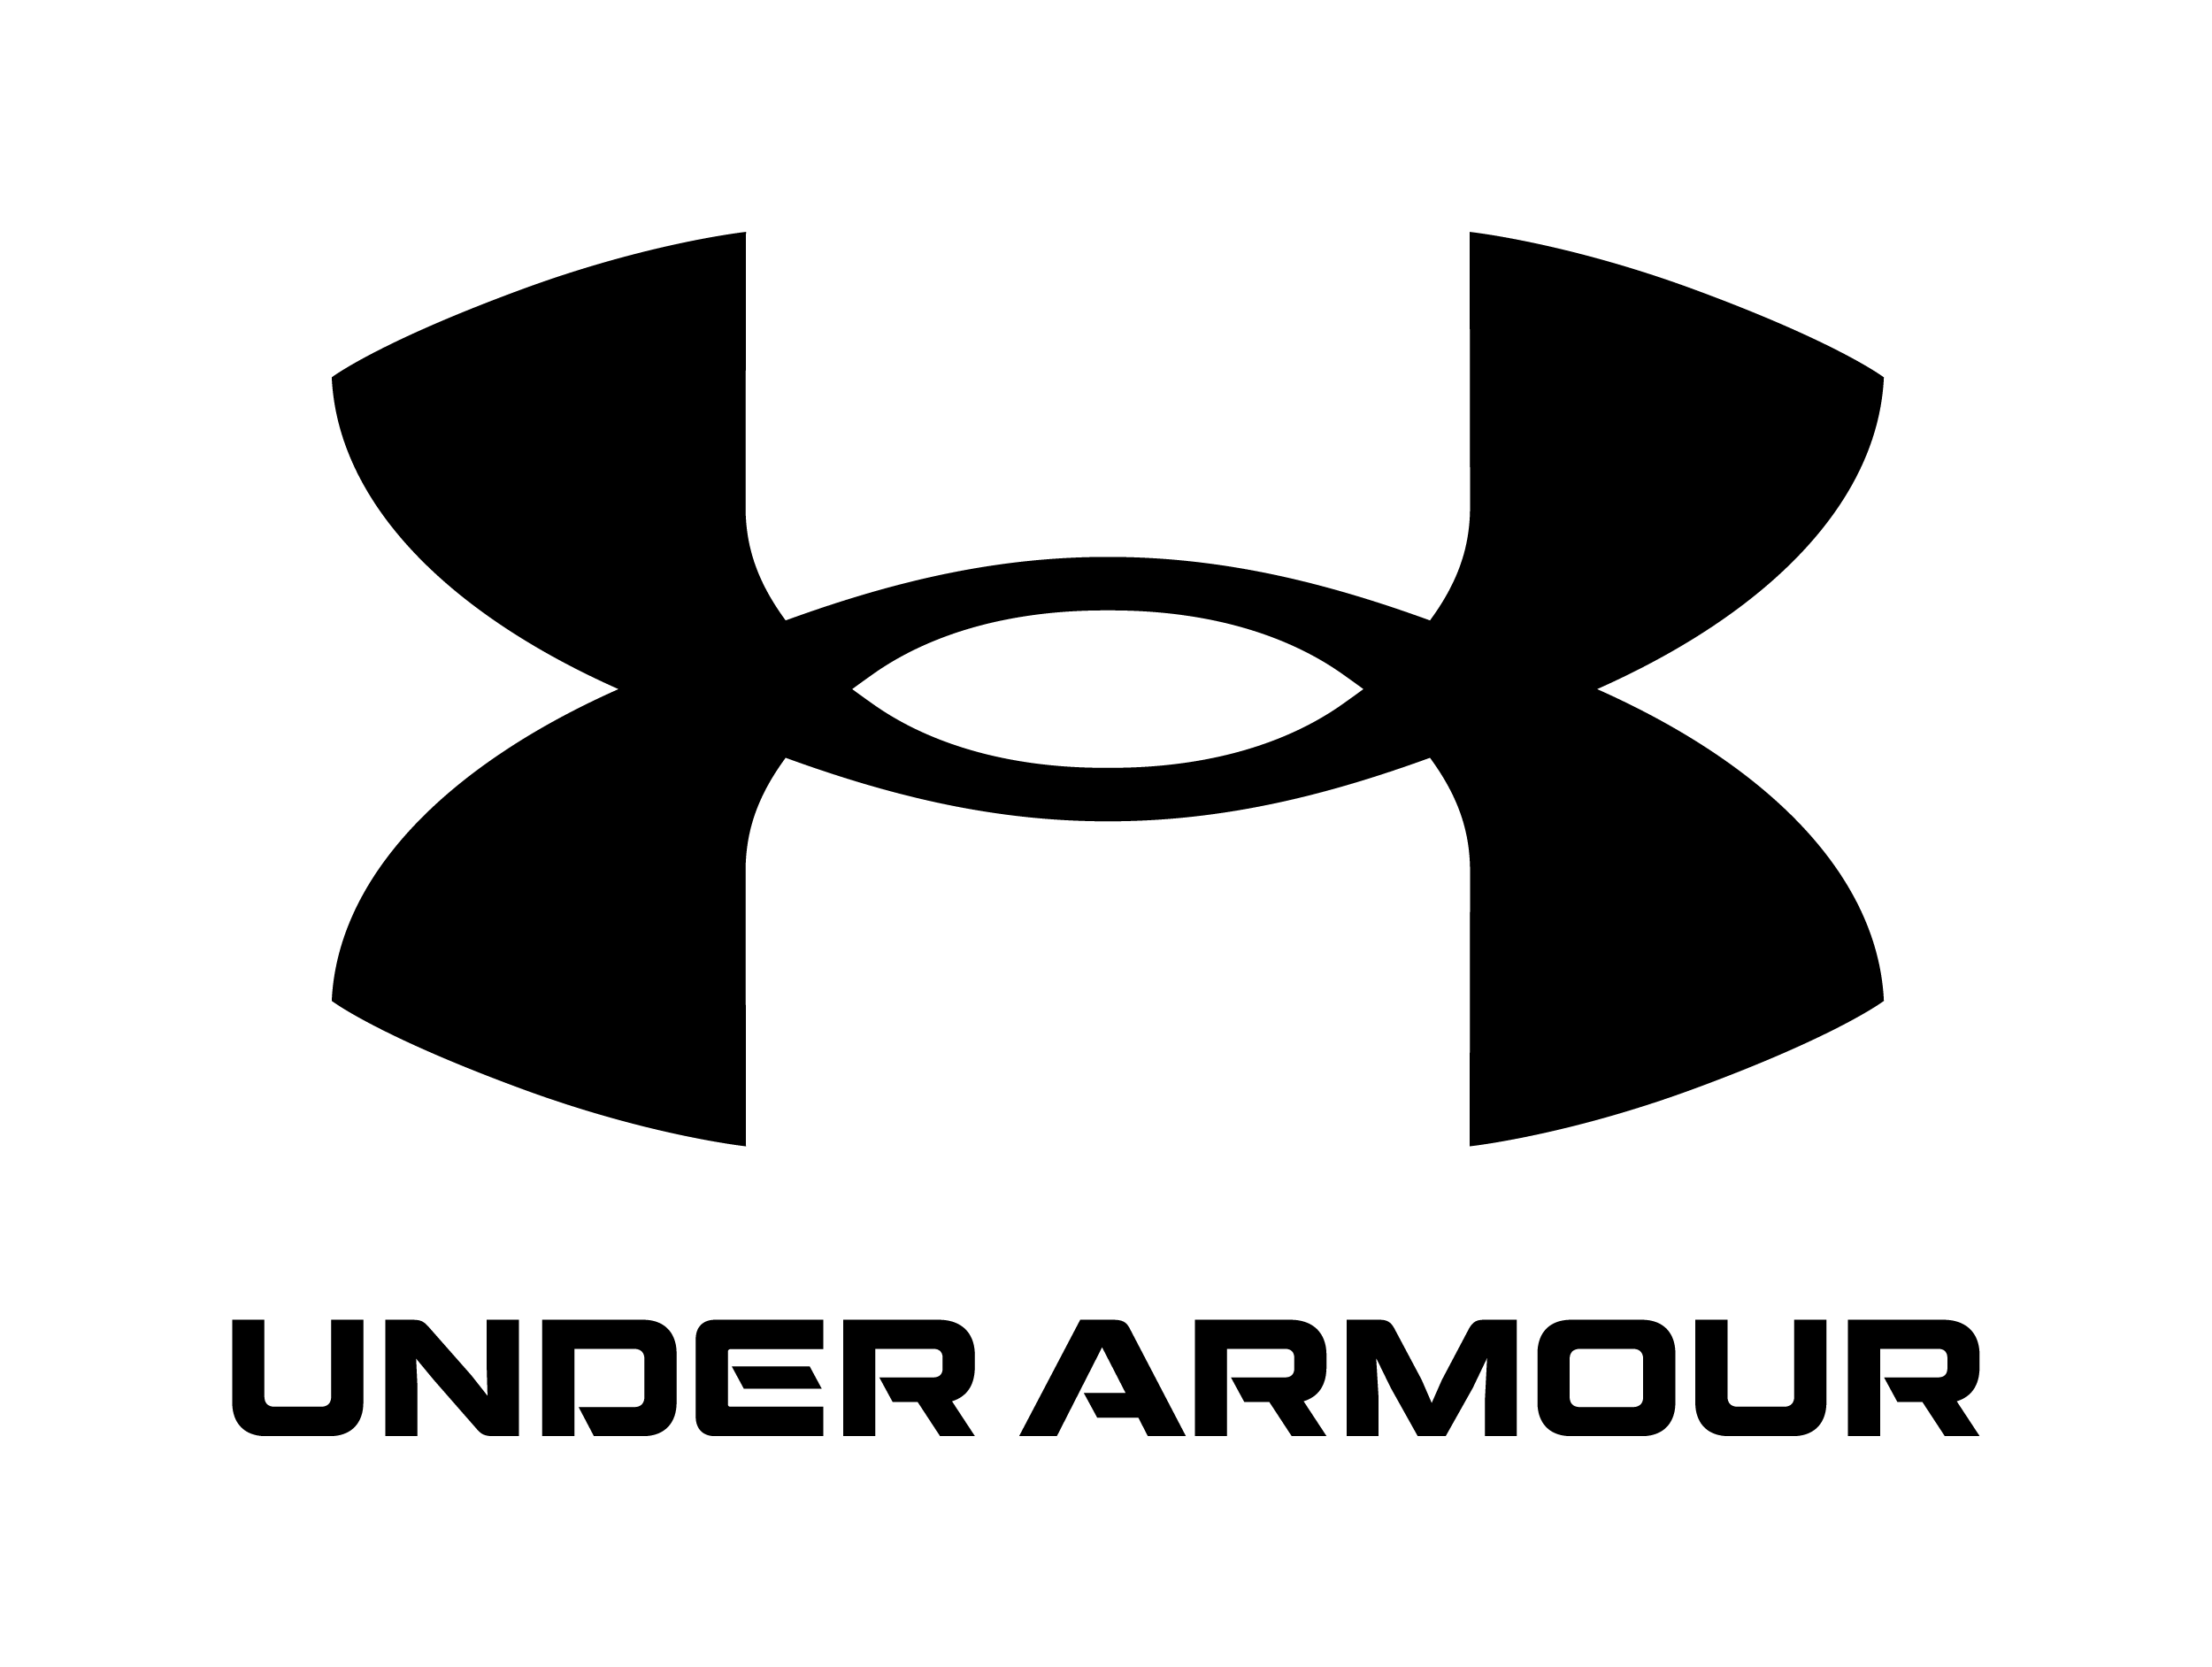 Beam Suntory logo